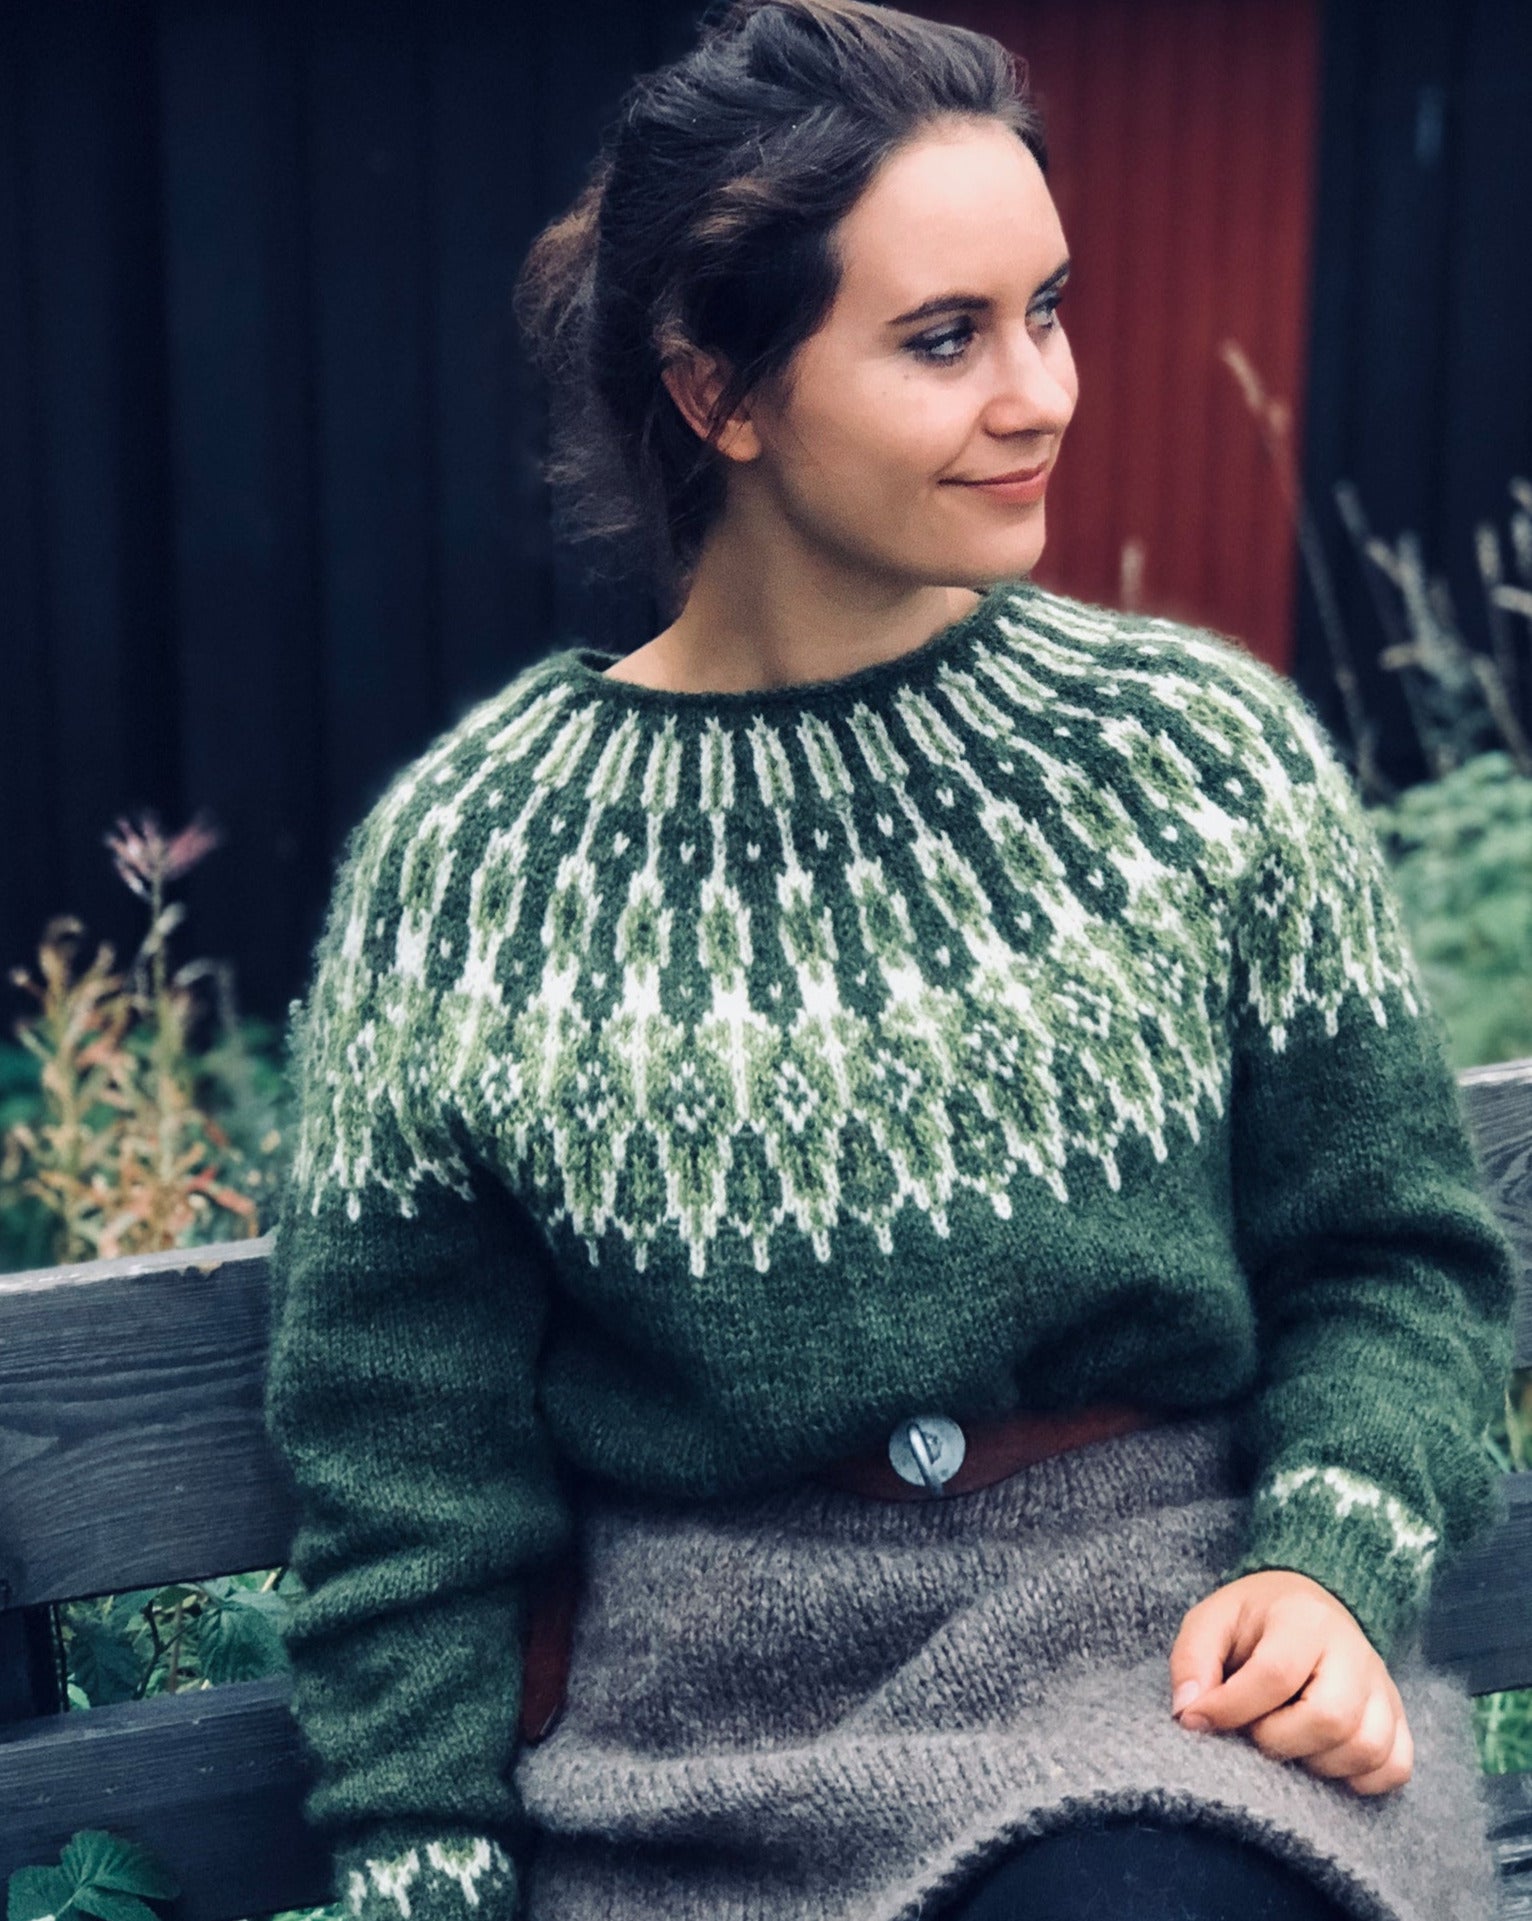 Tussellad sweater, olive green - Wilderness sweater 1 - Linka Neumann